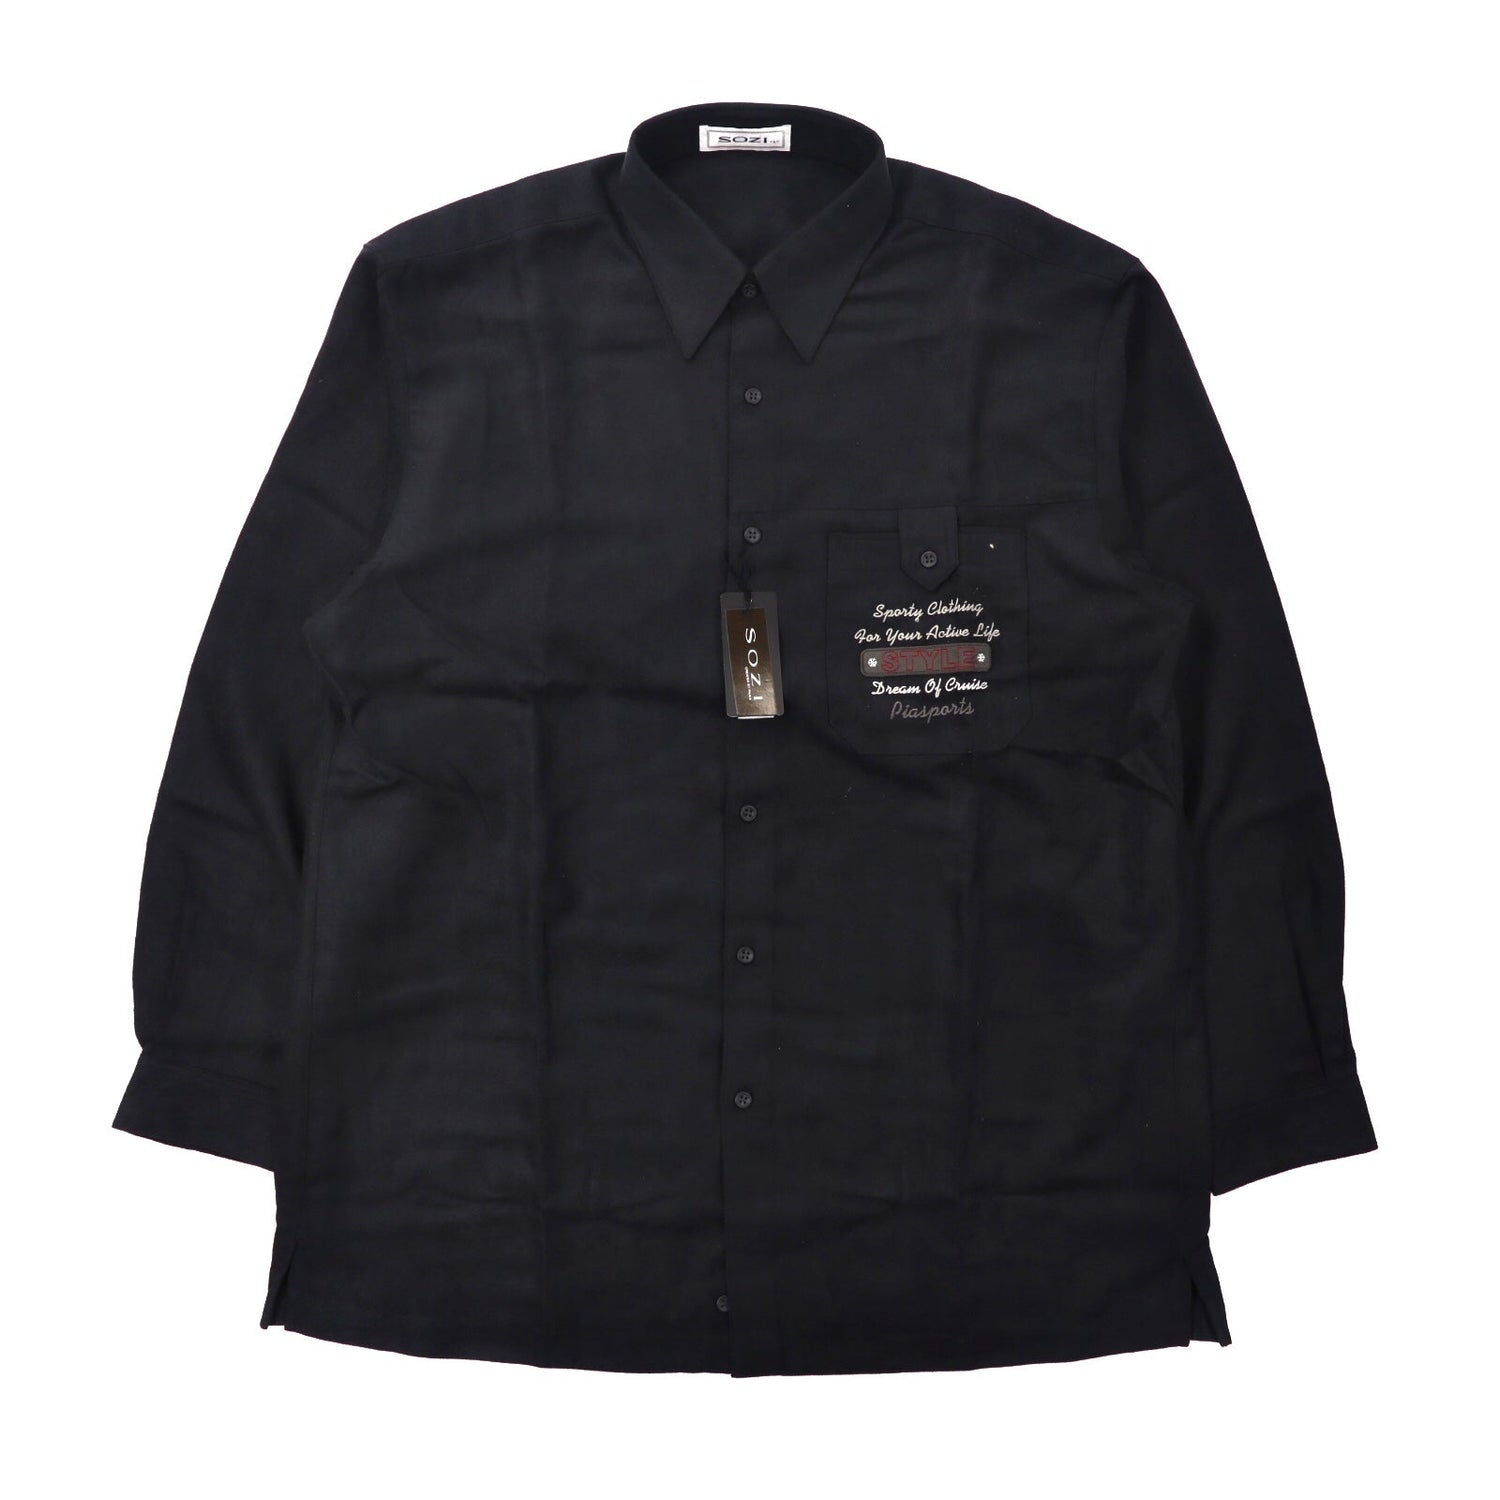 SOZI (Pia Sports) Shirt L Black polyester logo embroidery Unused ...